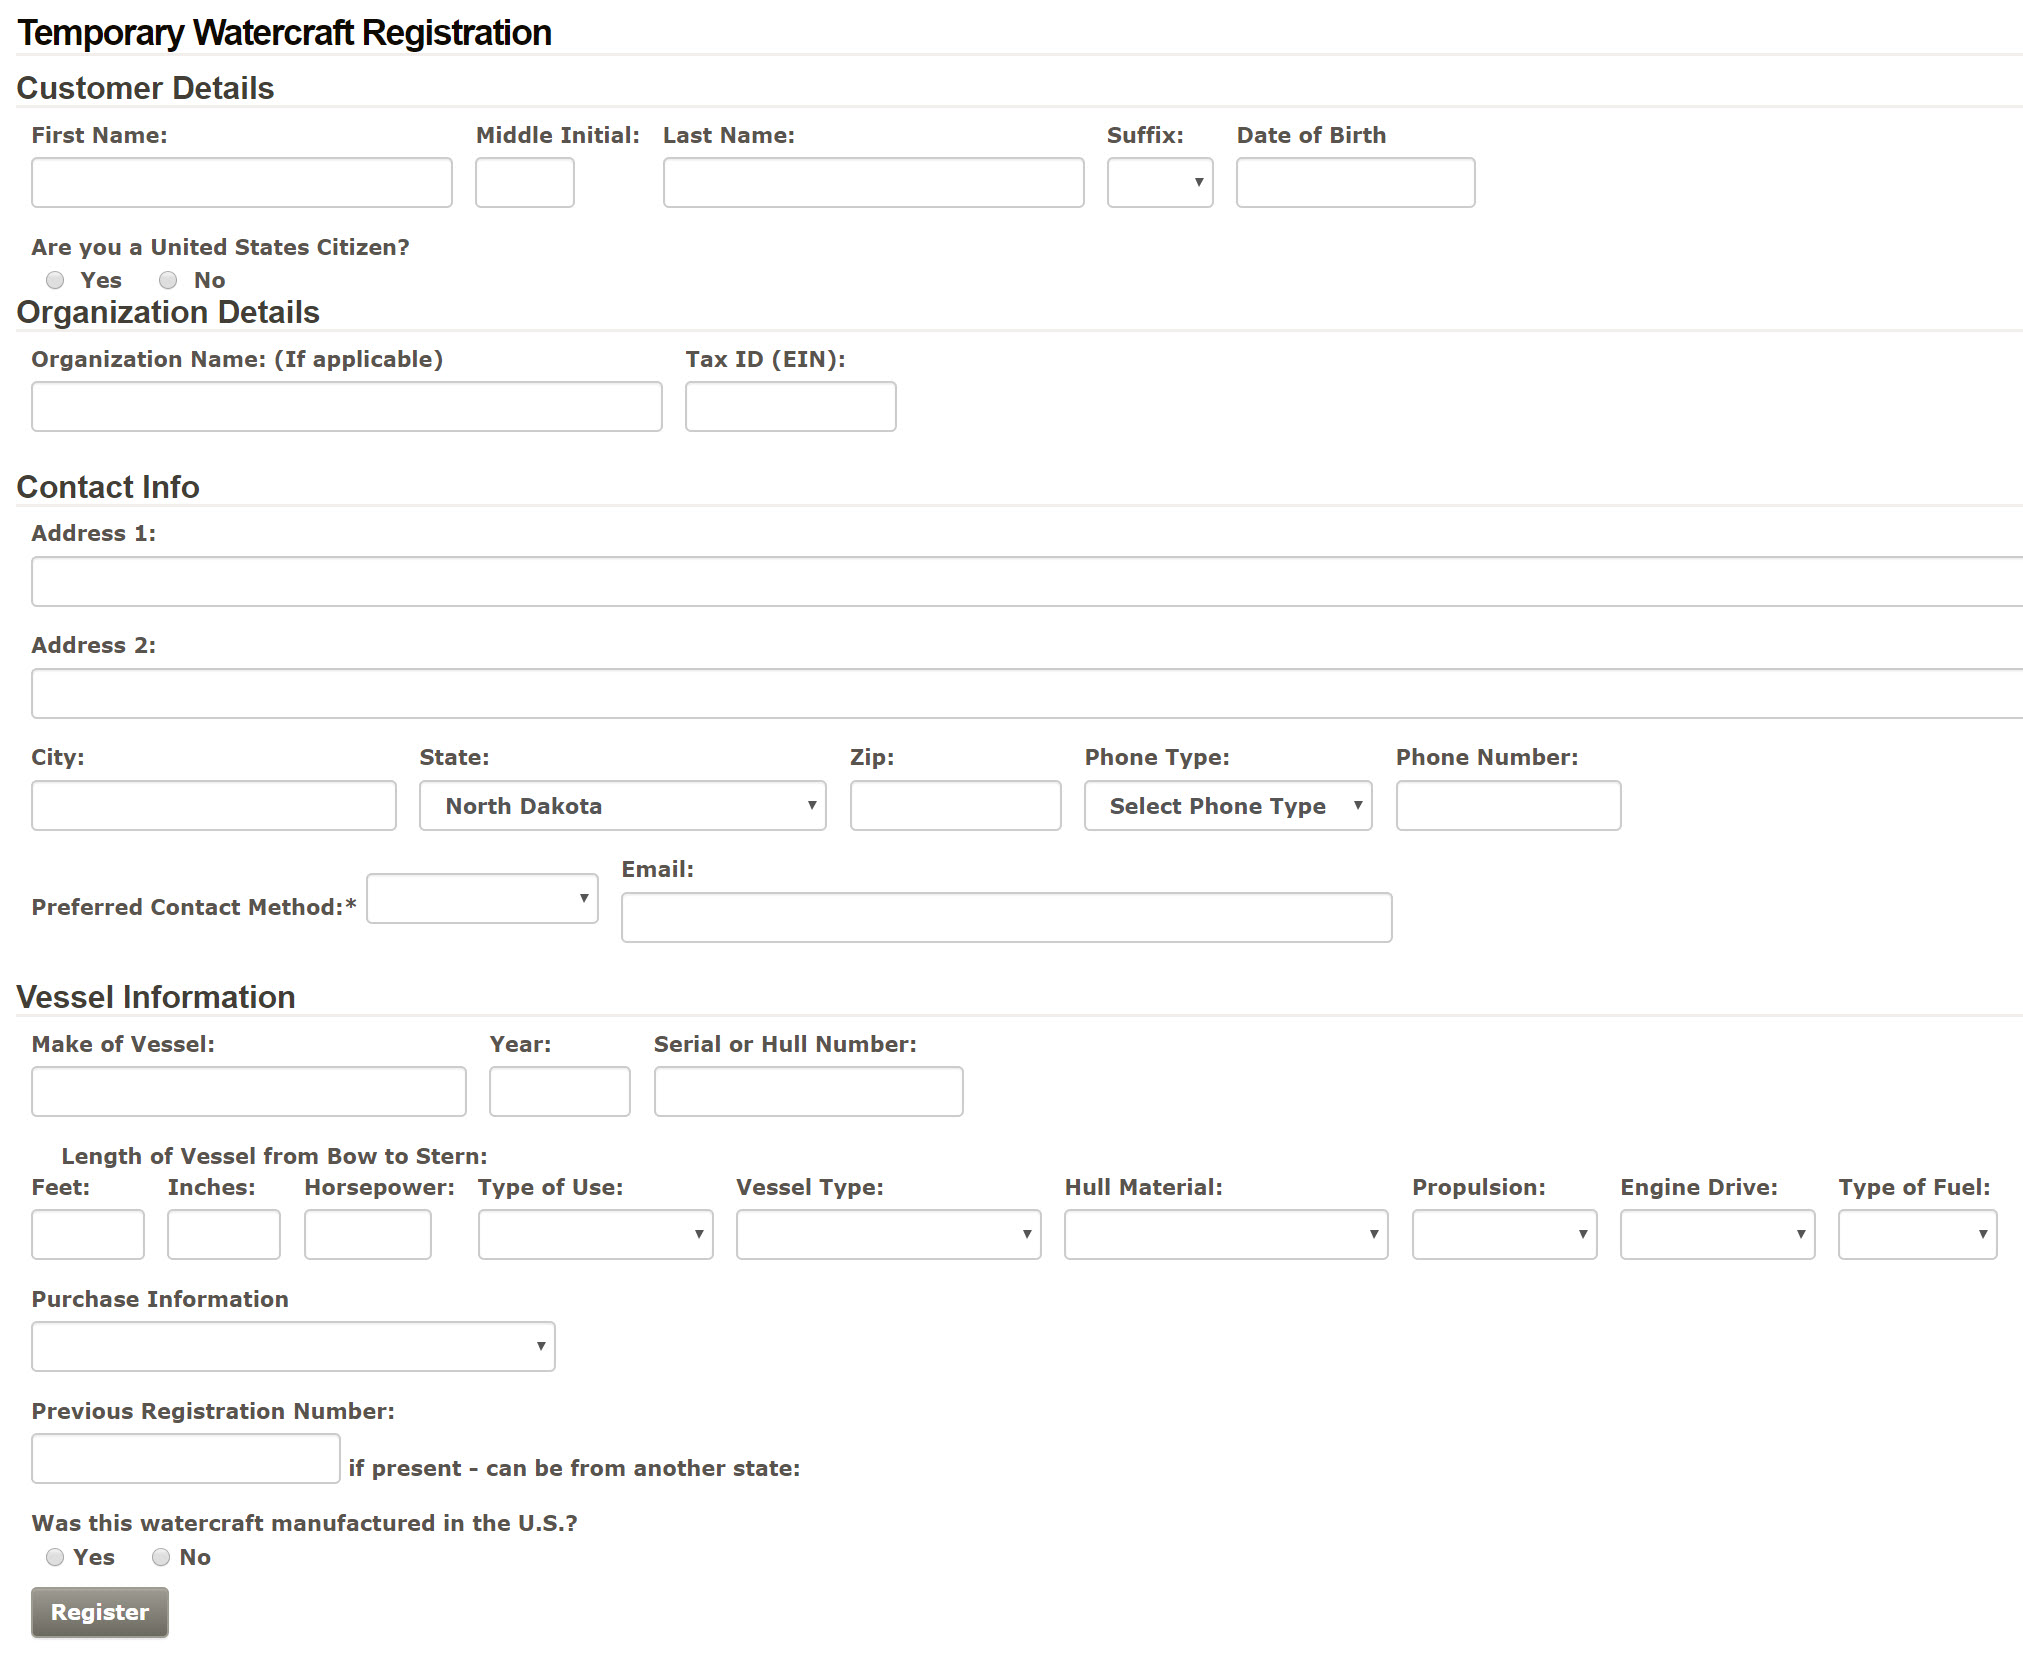 Temporary Watercraft Registration form screenshot